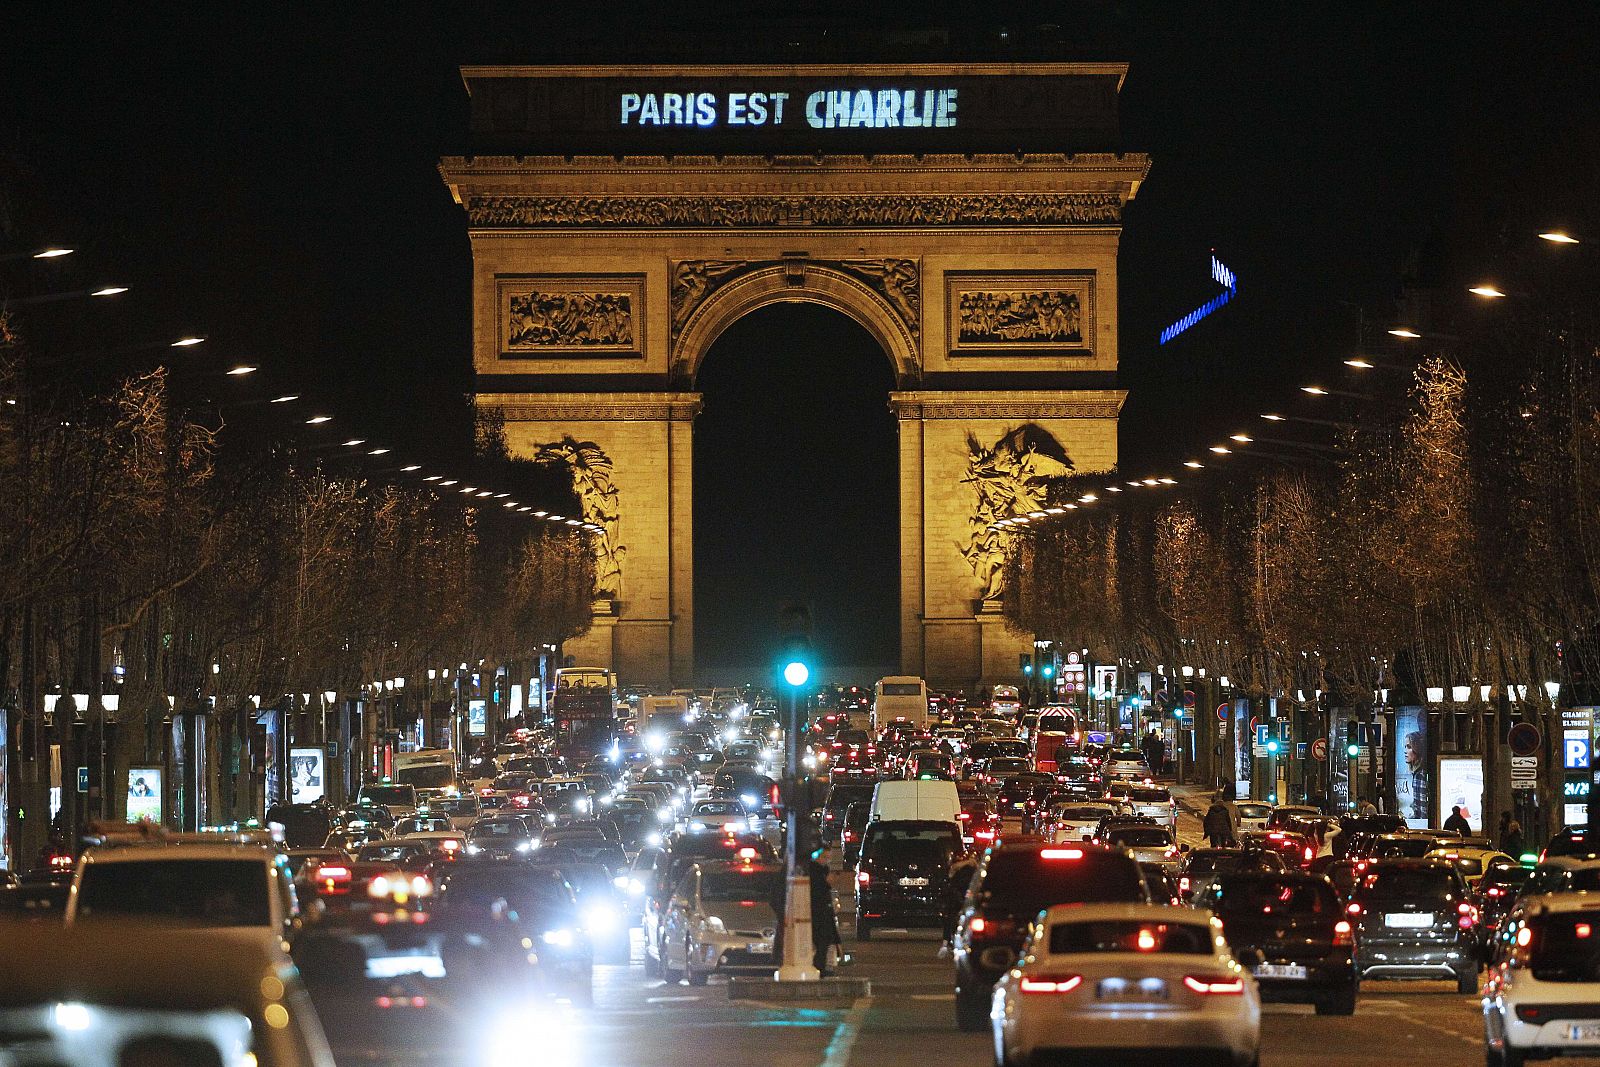 El Arco del Triunfo de la capital francesa presenta el mensaje "Paris est Charlie" (Paris es Charlie)